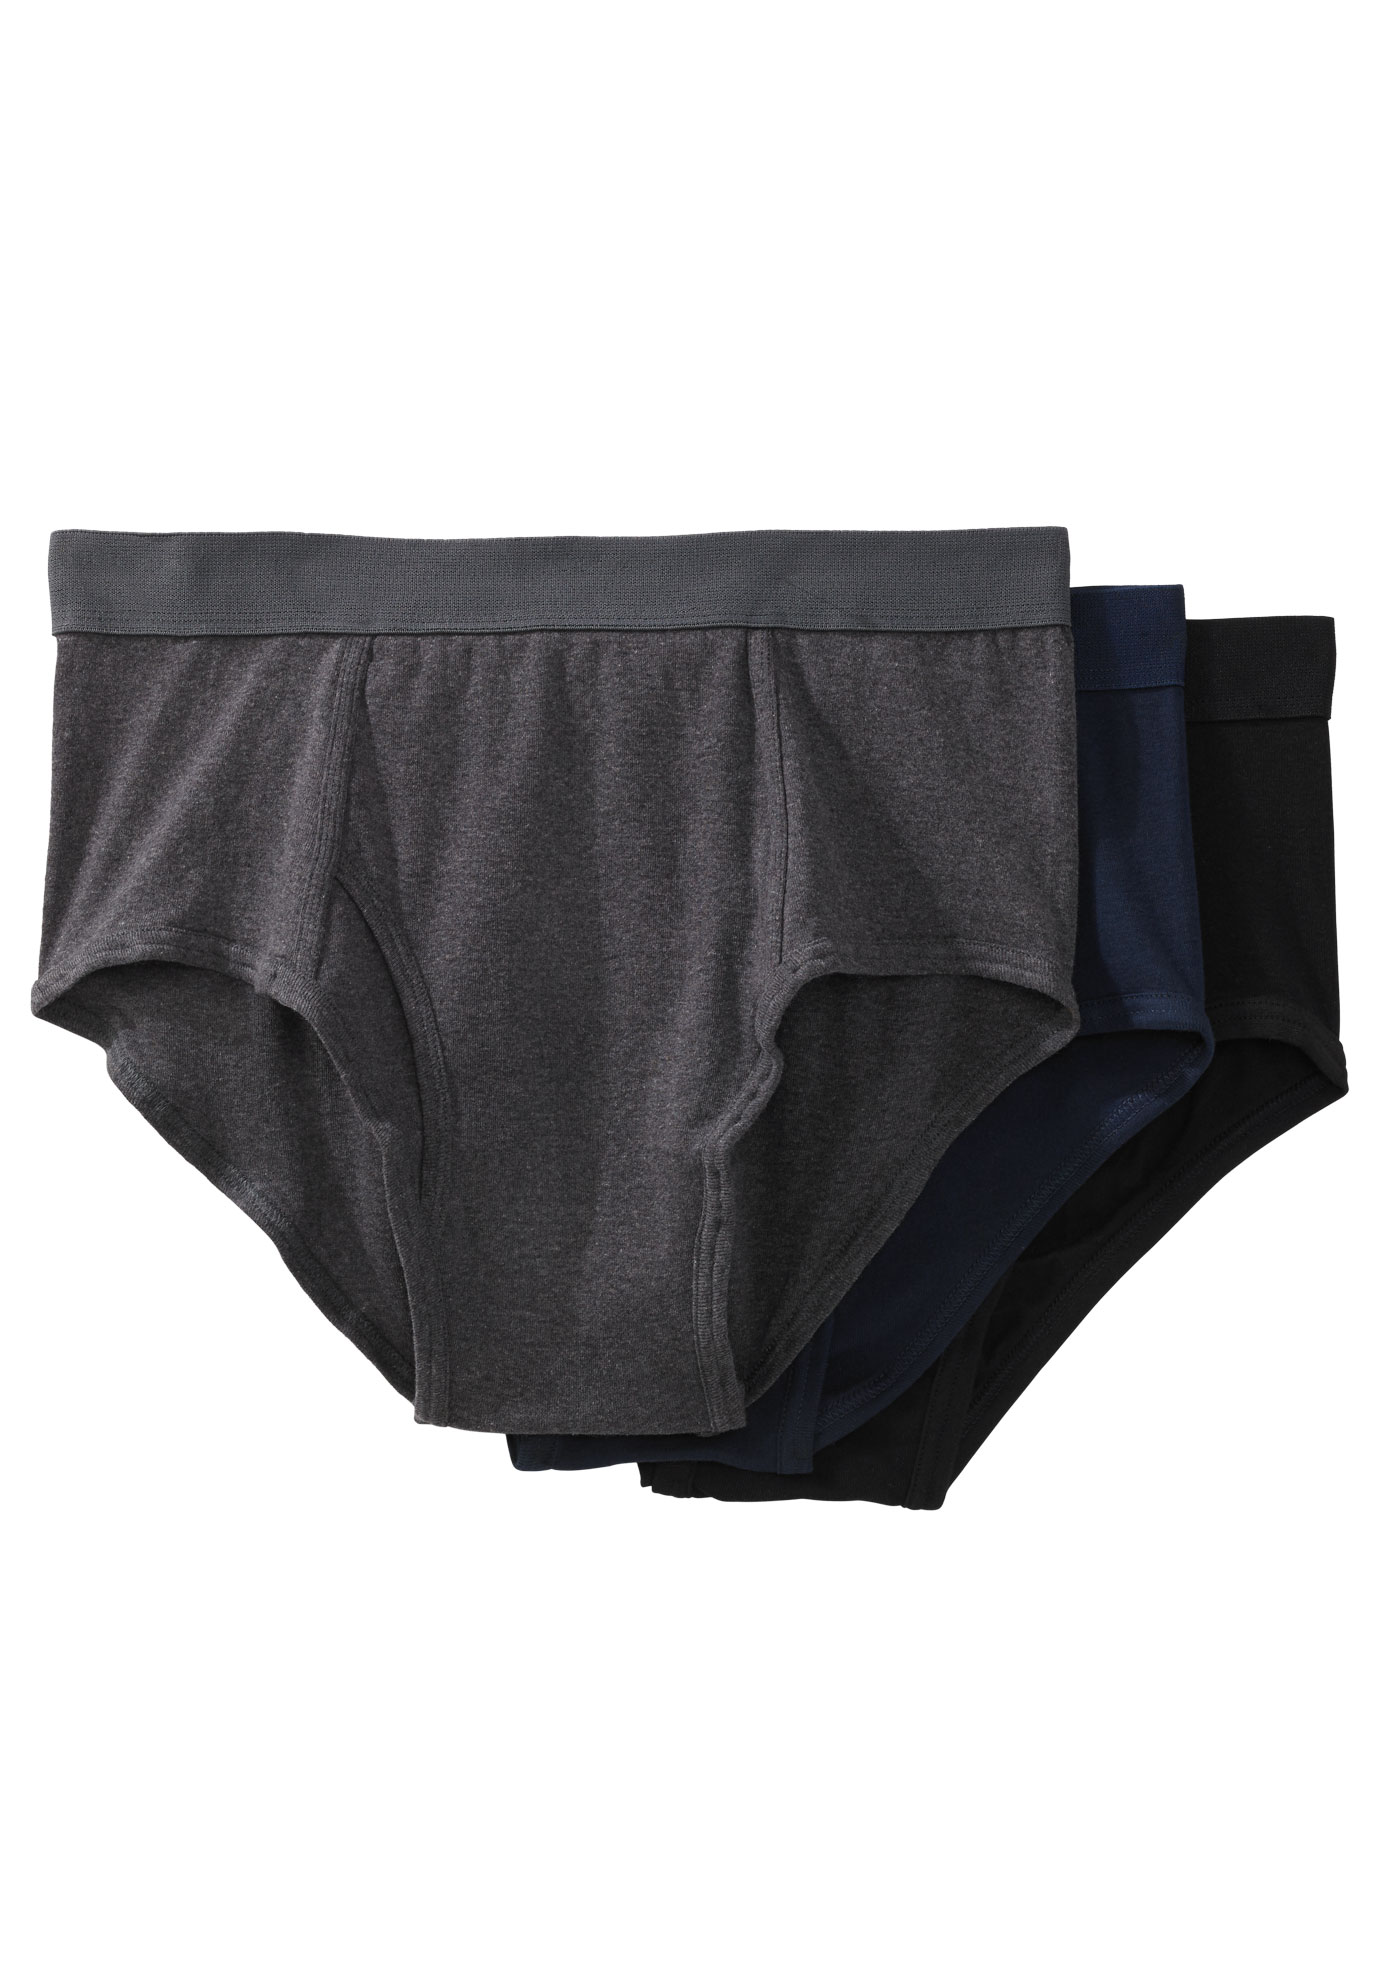 KingSize Men's Big & Tall Classic Cotton Briefs 3-Pack Underwear 